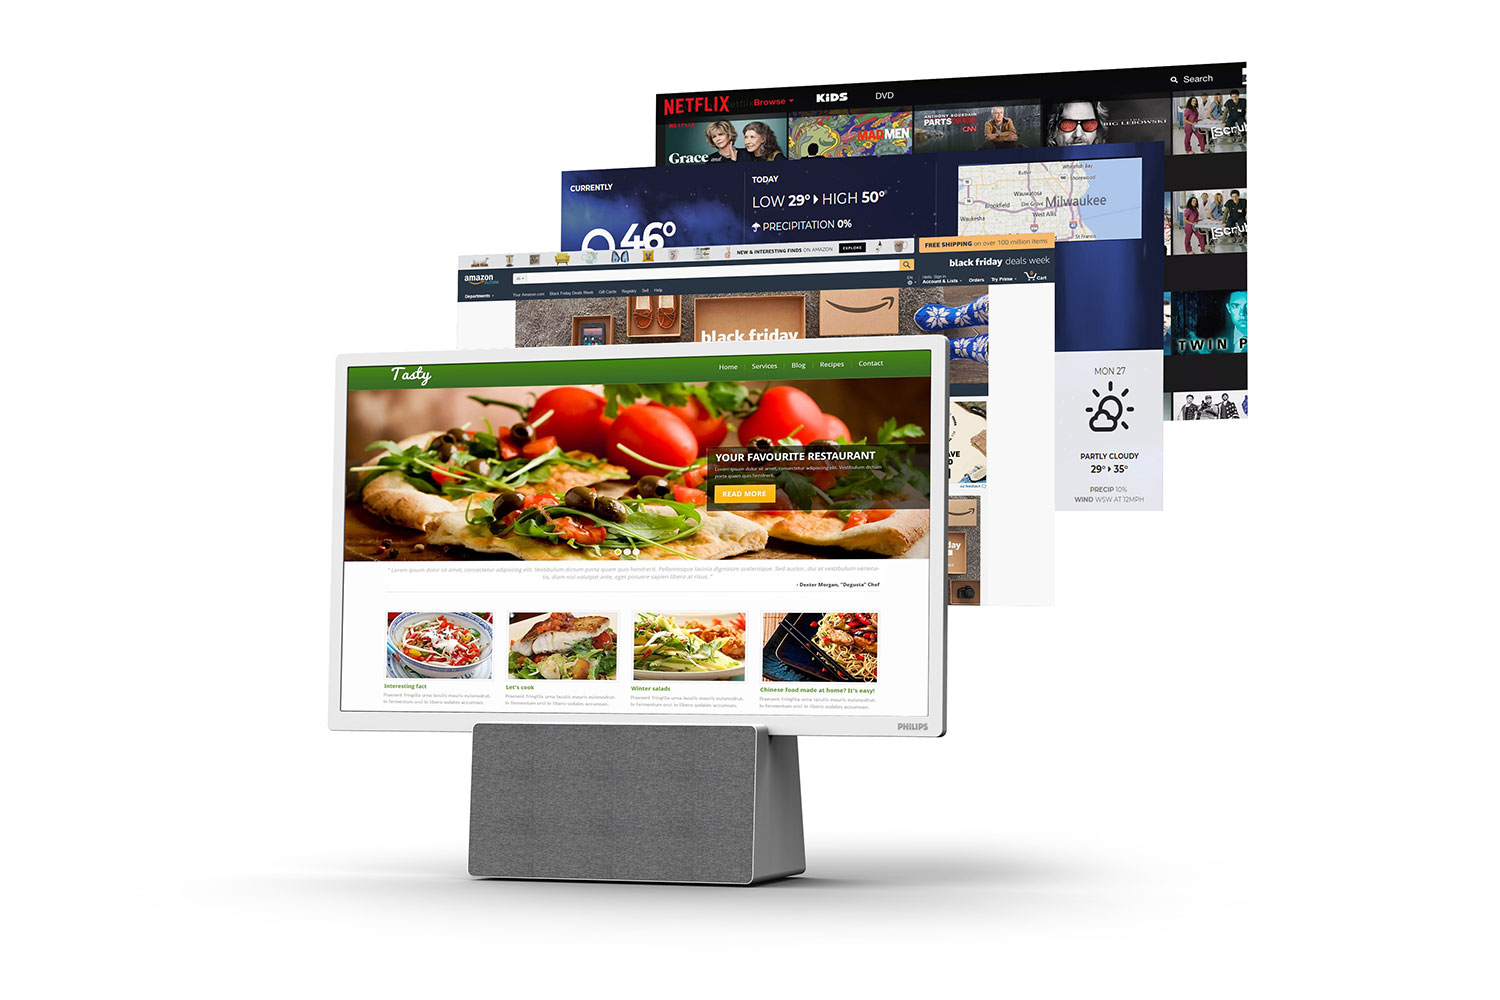 7703 Series Kitchen Android TV